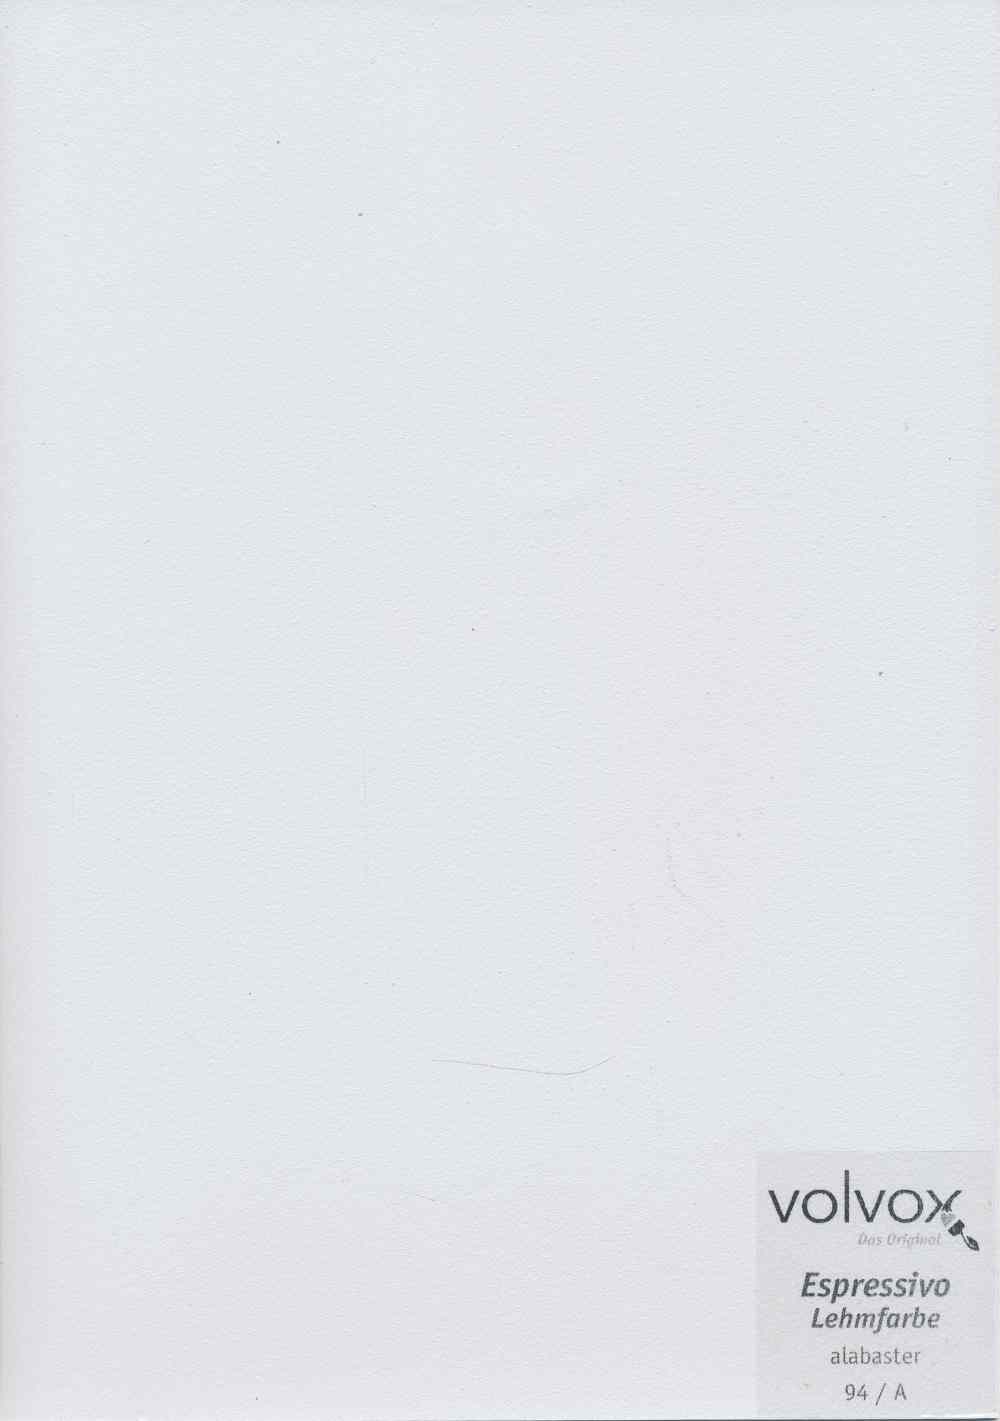 Volvox Espressivo Lehmfarbe 094 alabaster 